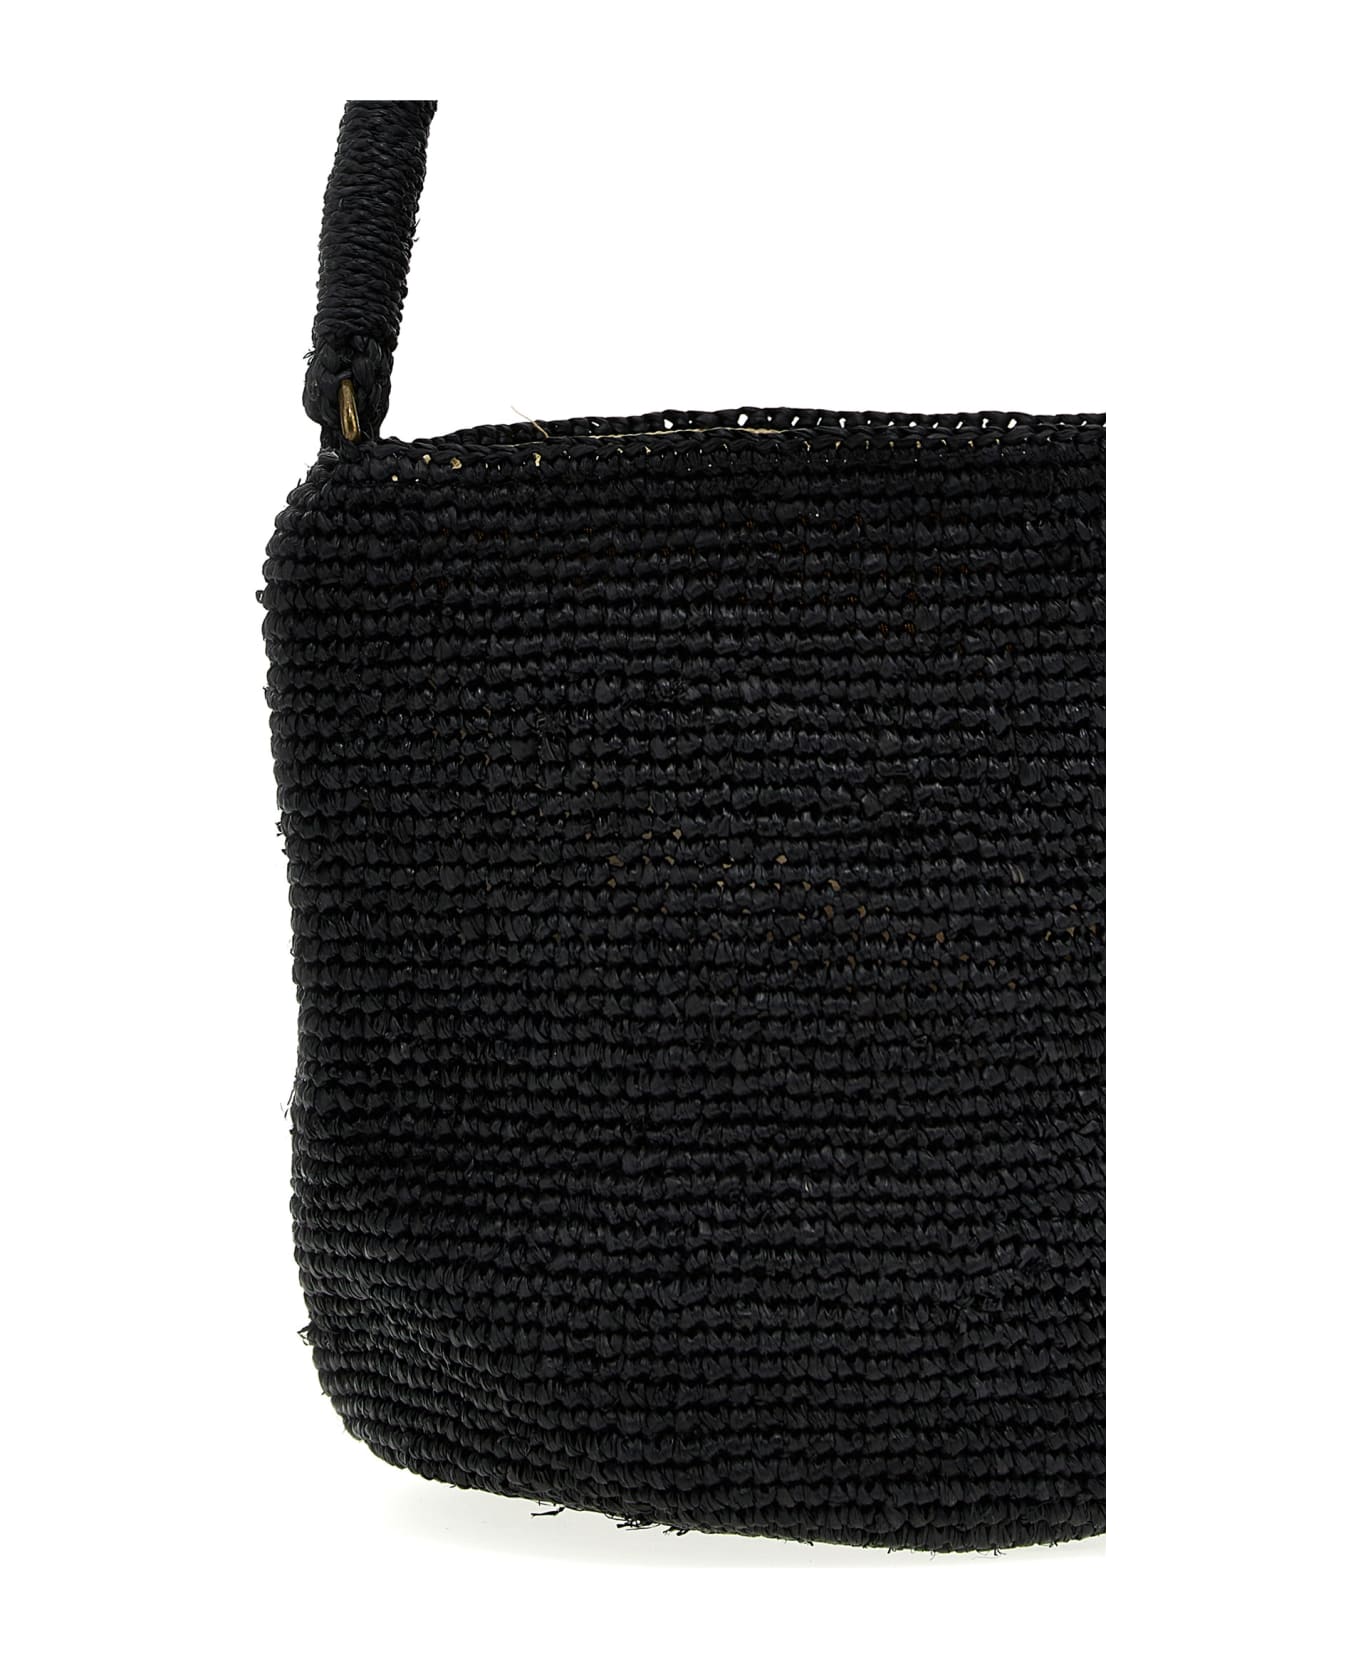 Ibeliv 'siny' Handbag - Black  